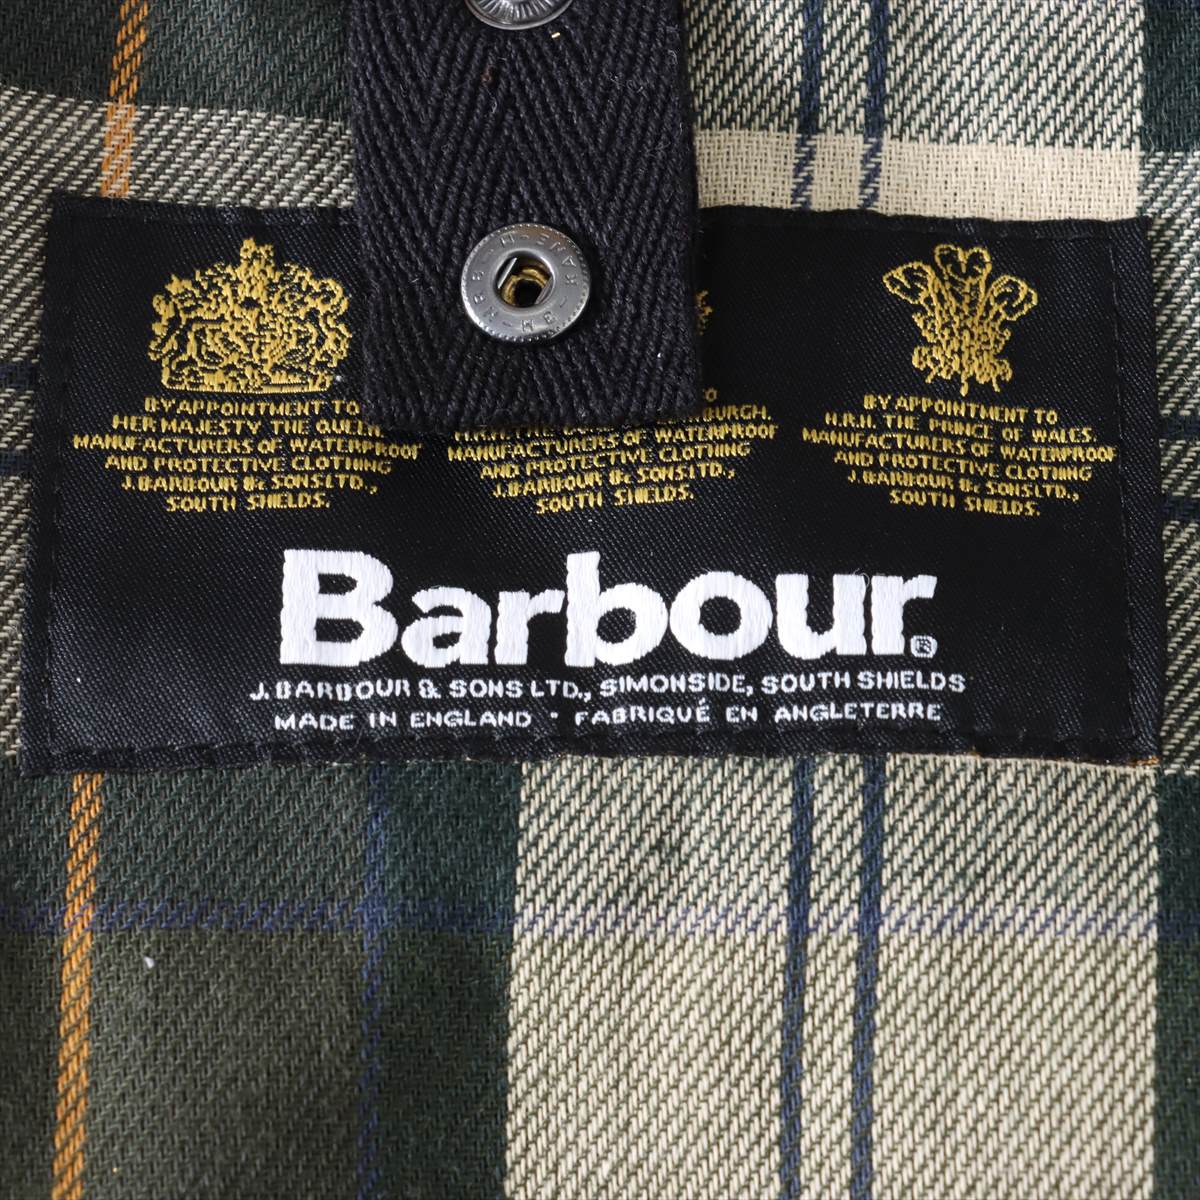 Babour Cotton Oiled Jacket 34 Unisex Khaki SL BEDALE with Pin Batch | eBay